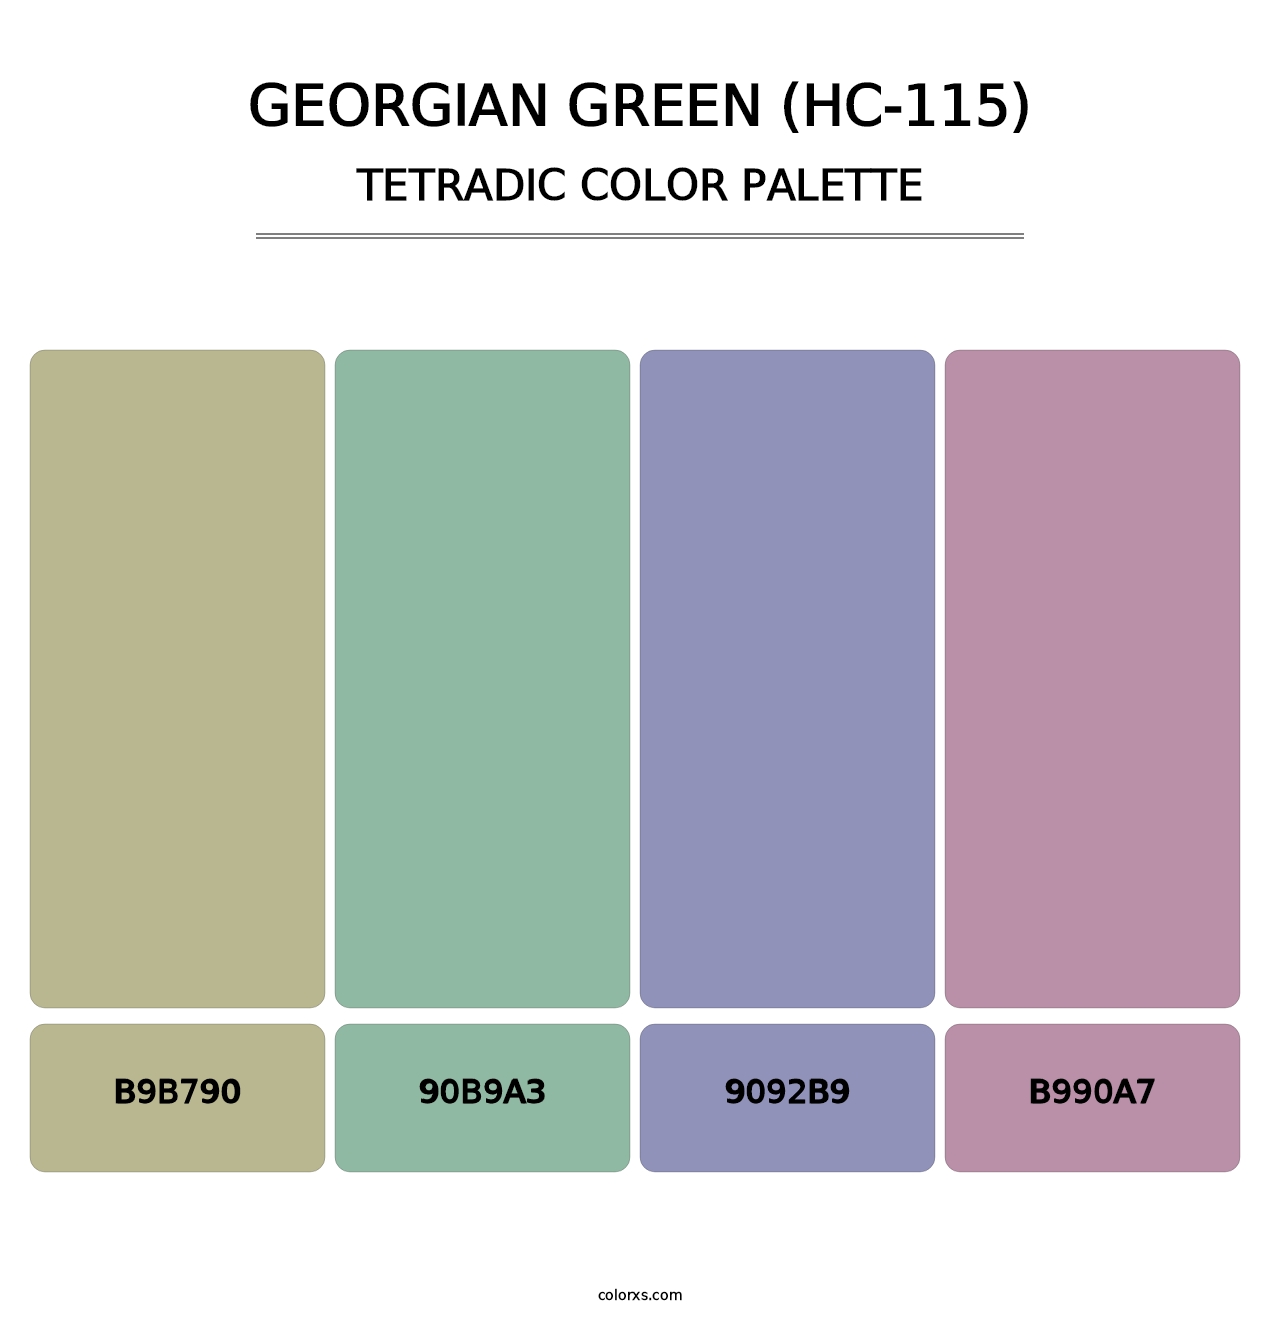 Georgian Green (HC-115) - Tetradic Color Palette